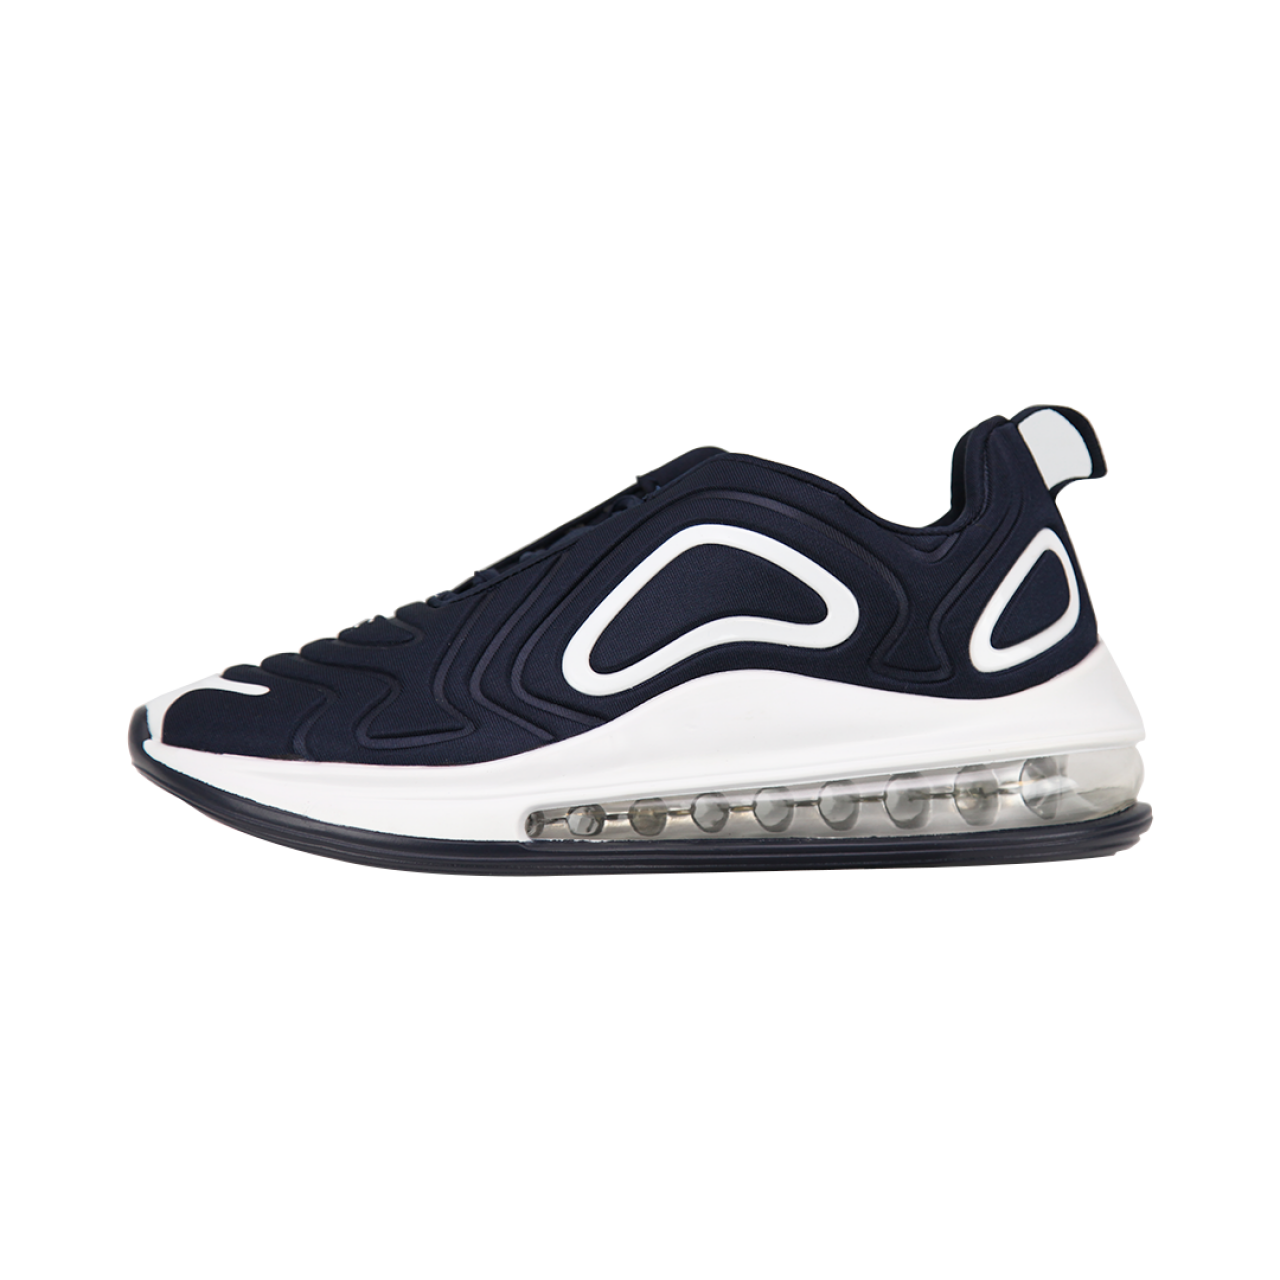 Zeekas Best Branded Sports Casual Sneakers Lace Up Navy Blue Shoes Mens